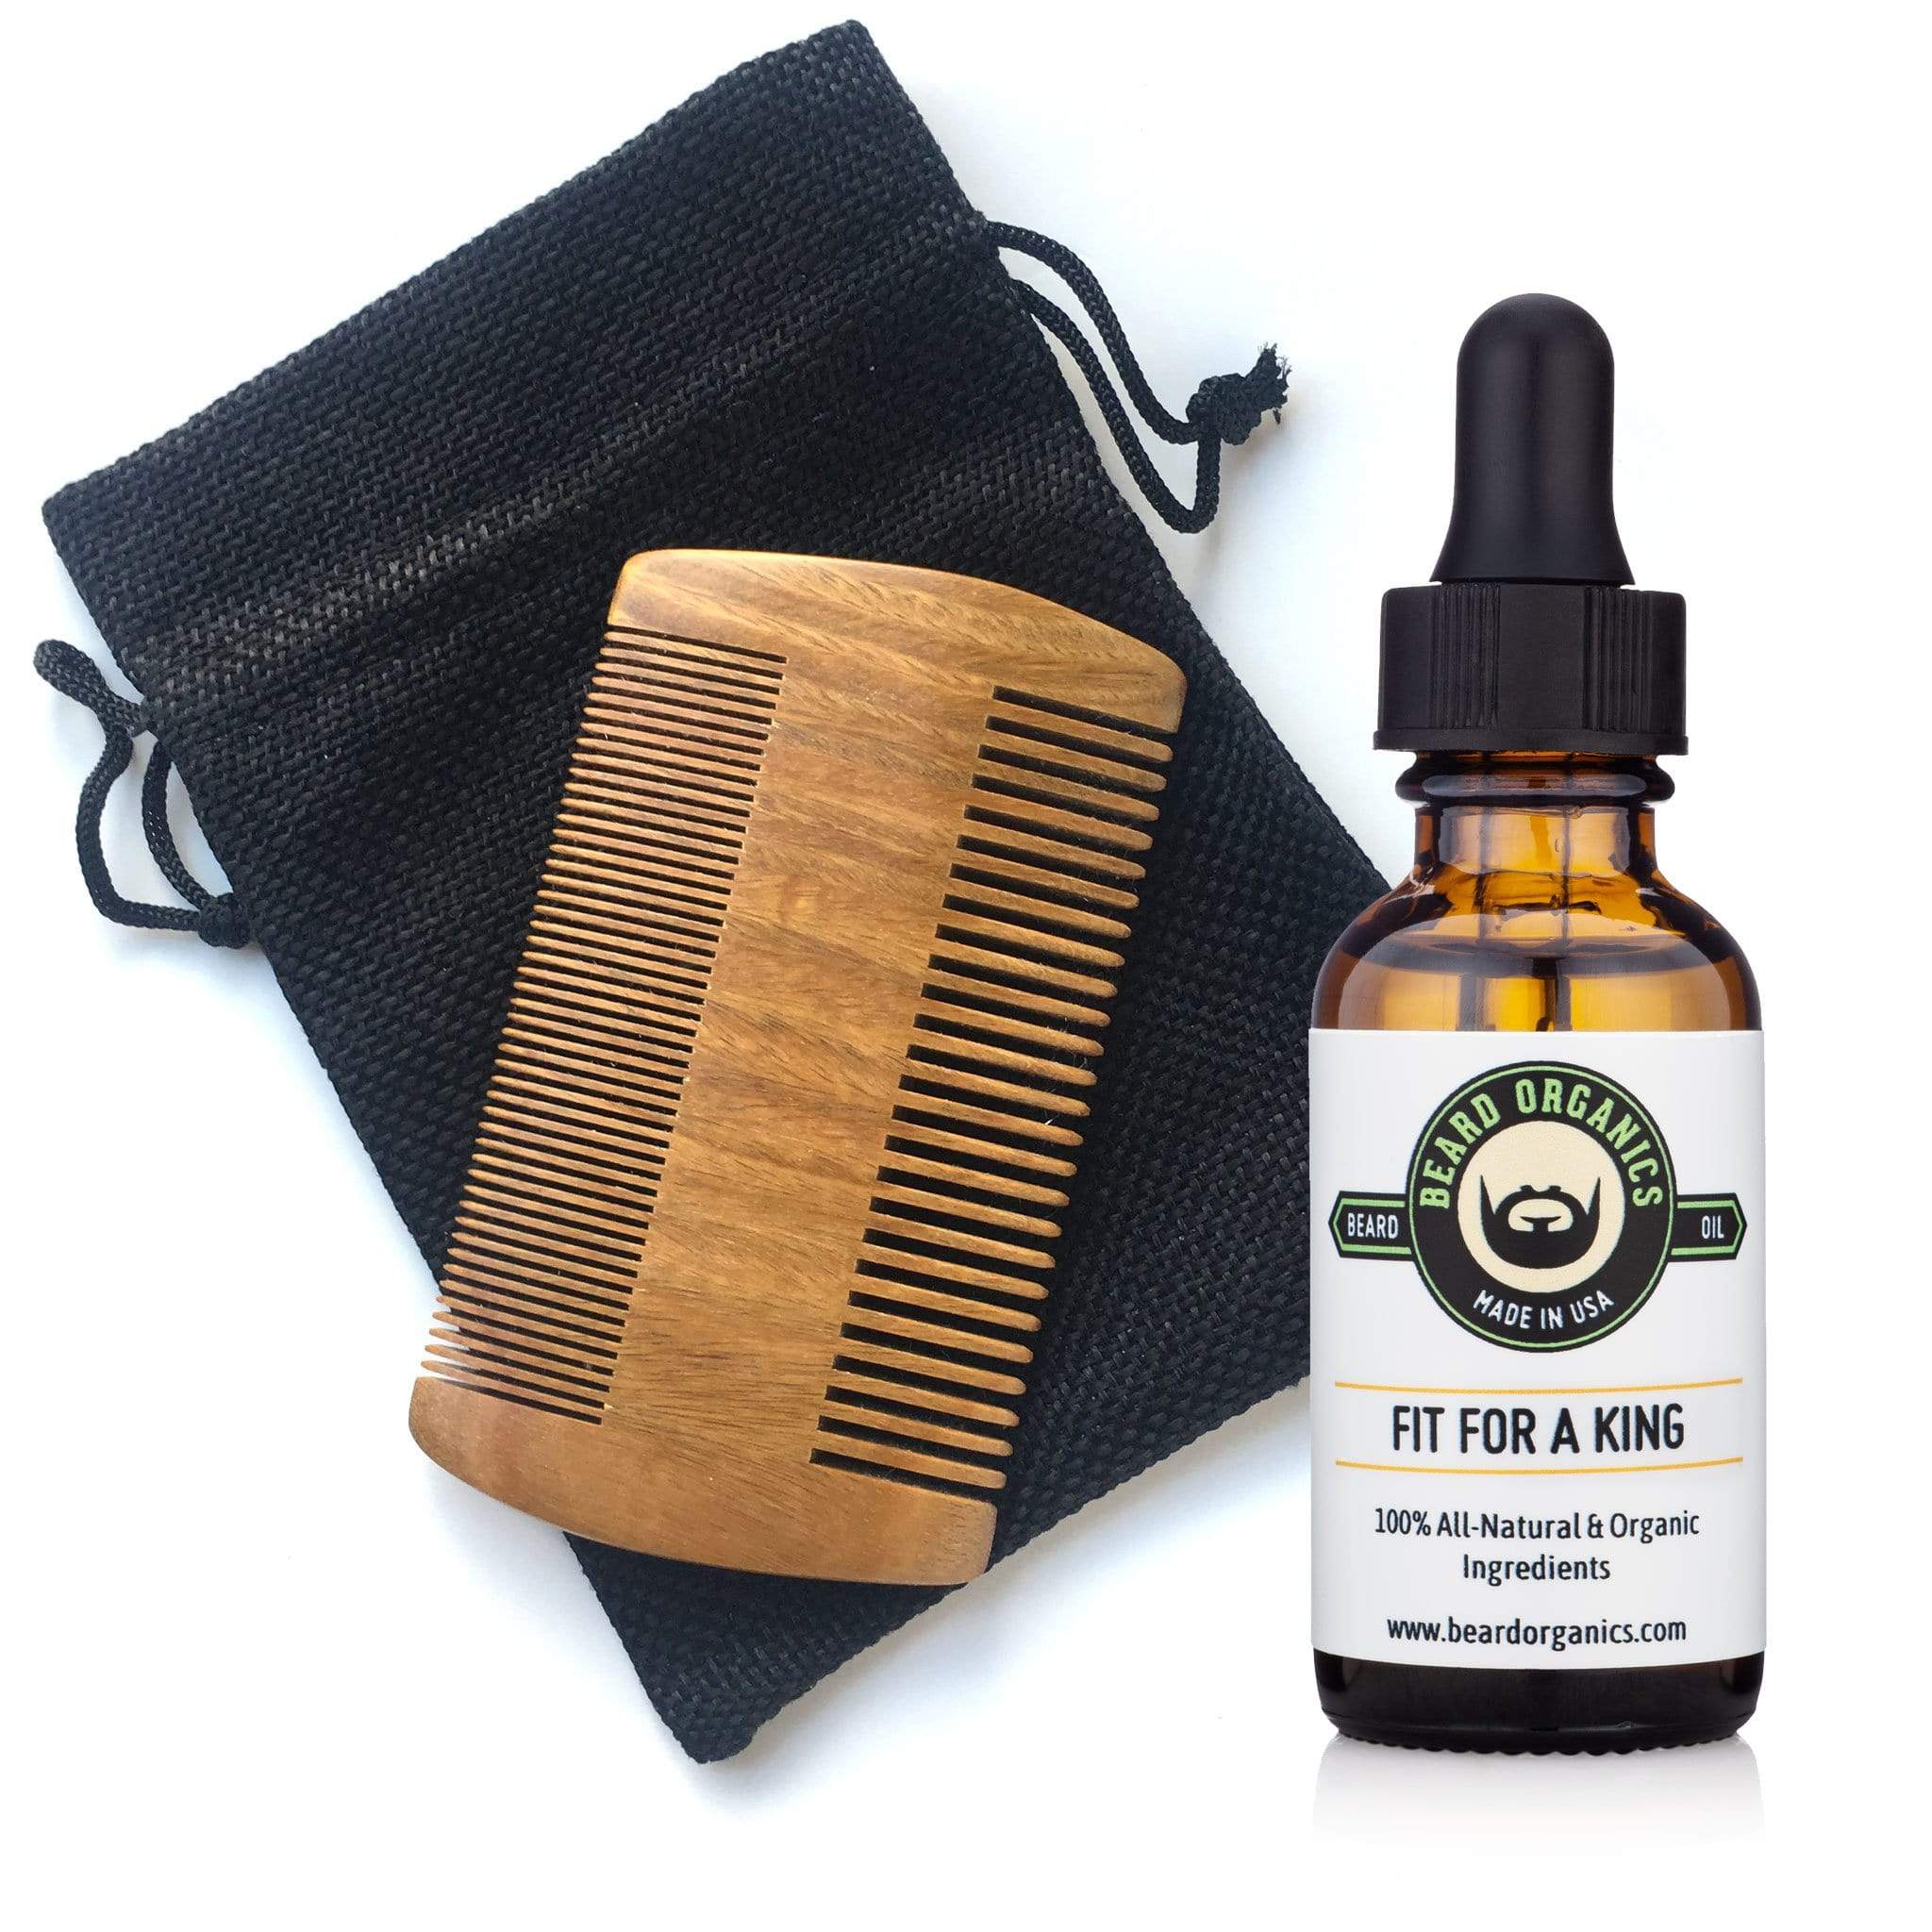 Beard Comb & Fit For A King Beard Oil Combo by Beard Organics